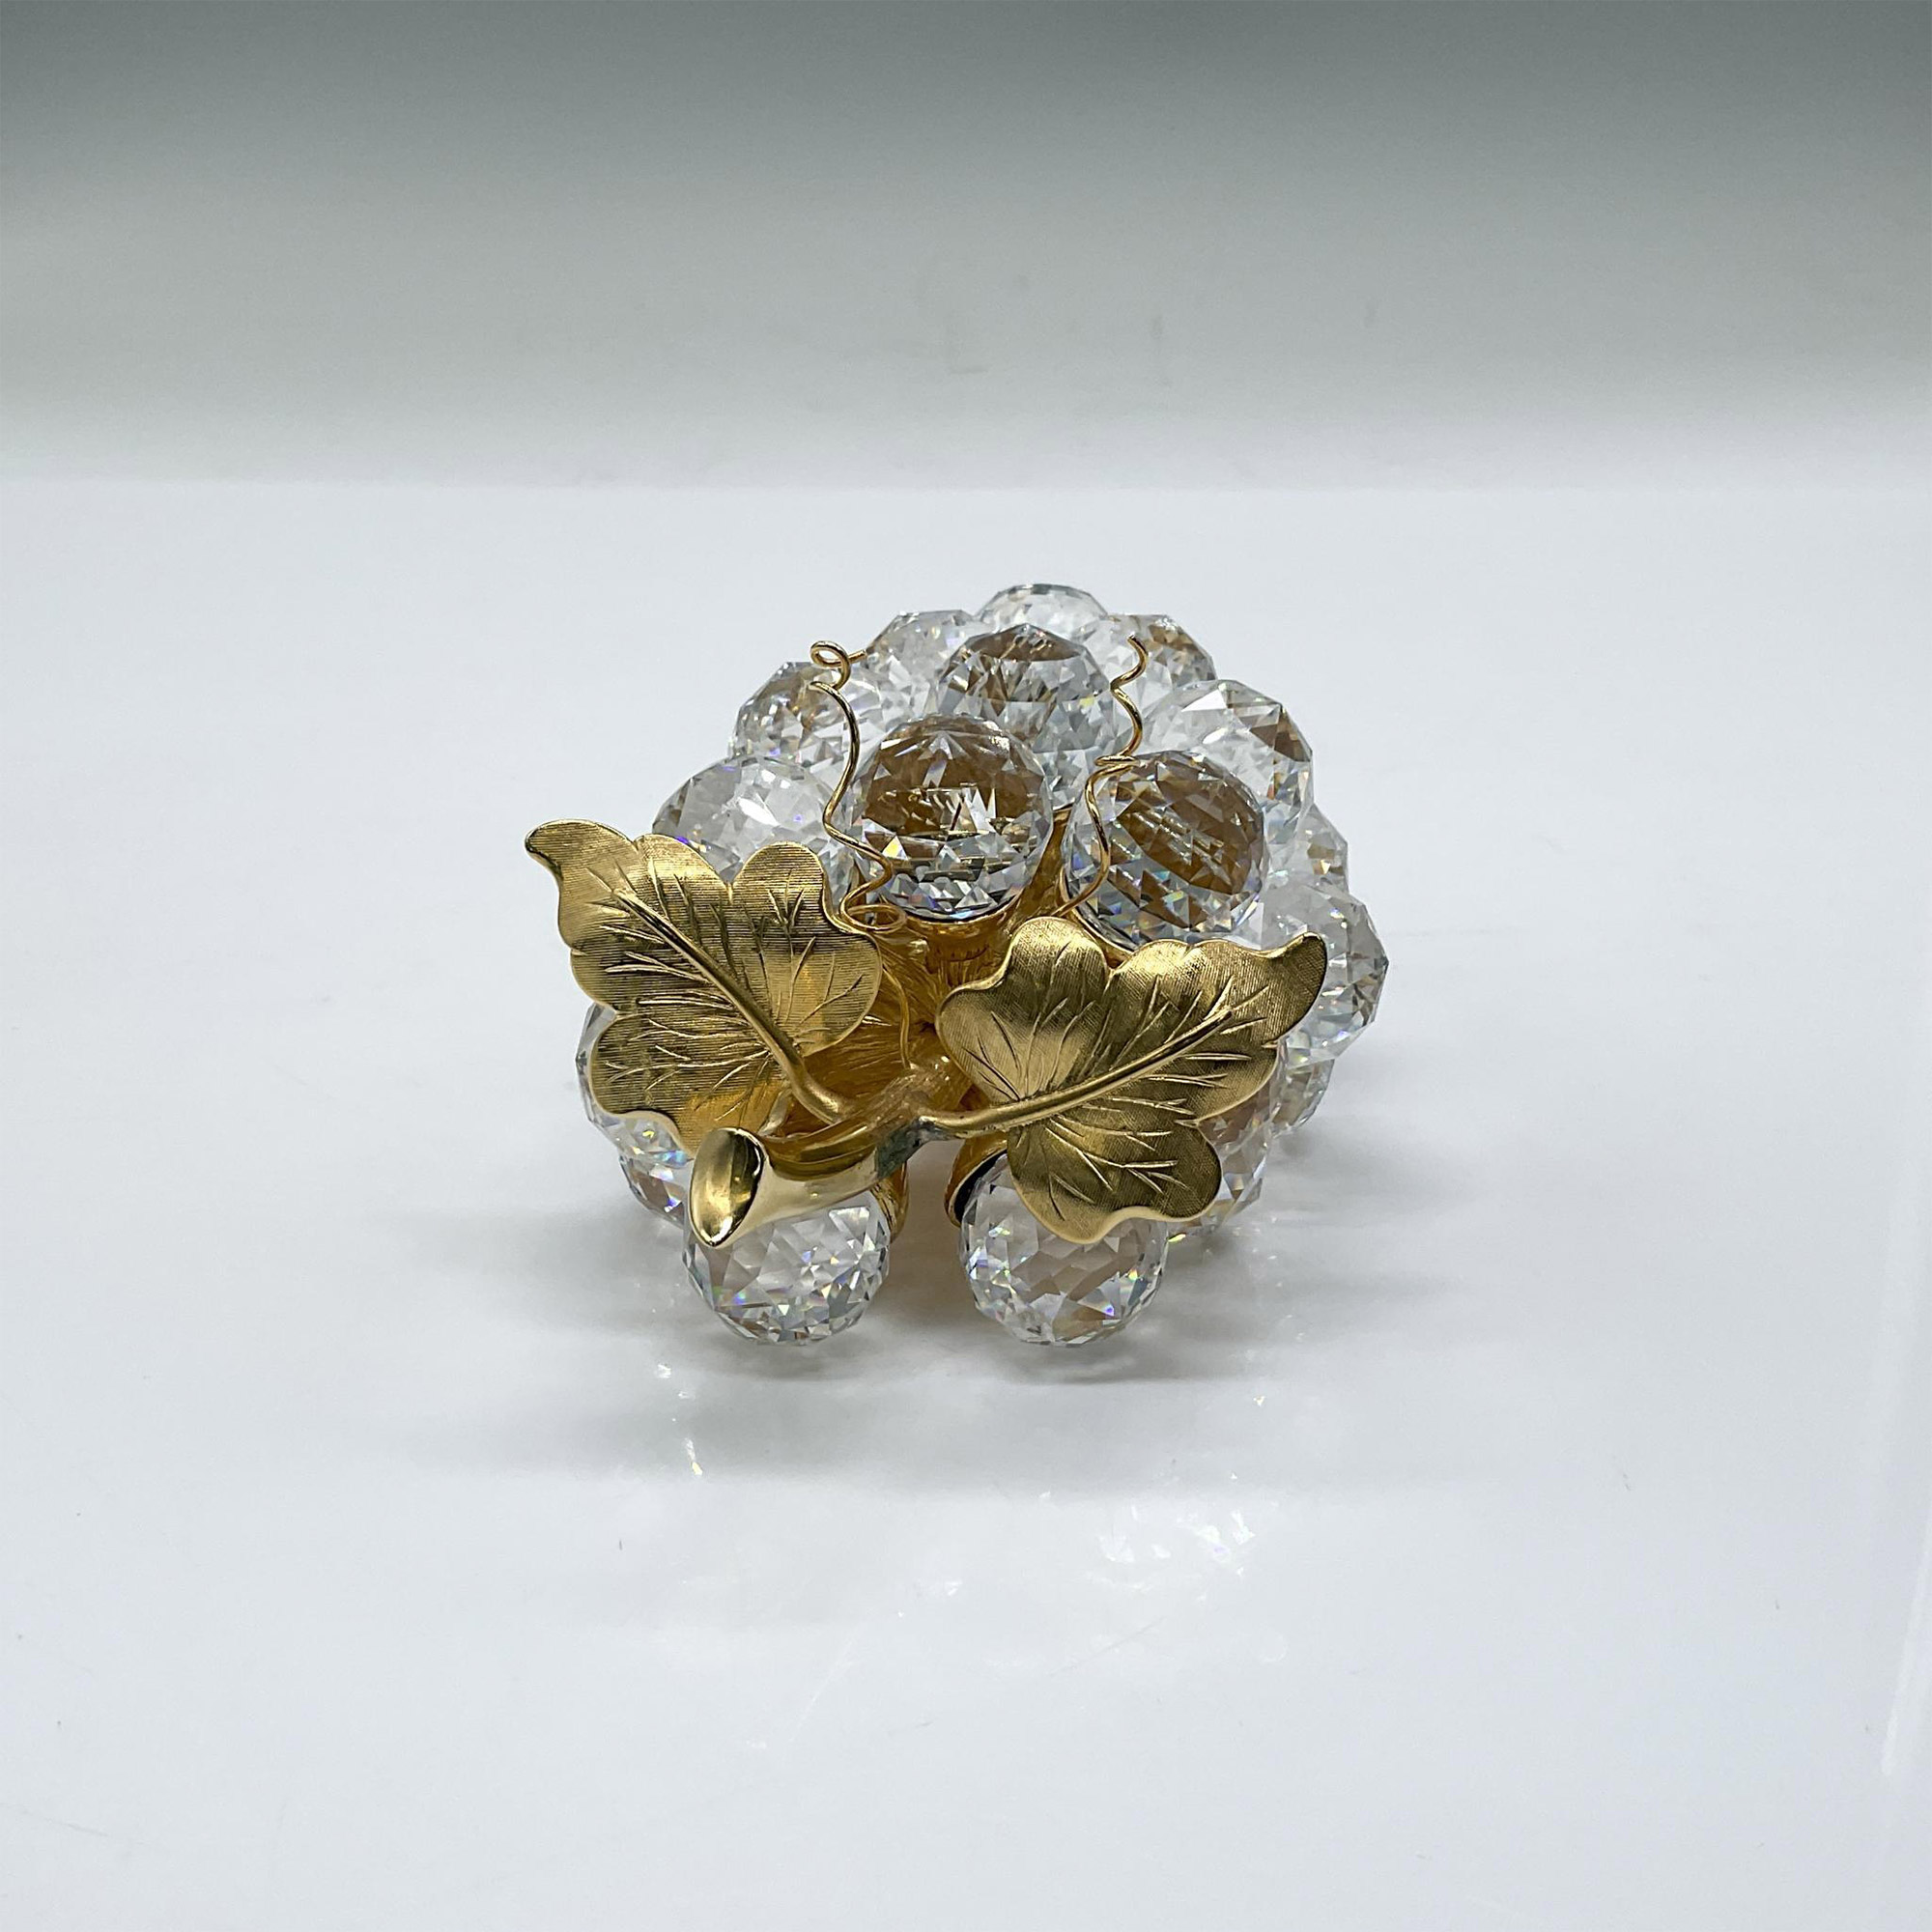 Swarovski Crystal Figurine, Grapes, Medium - Image 2 of 4